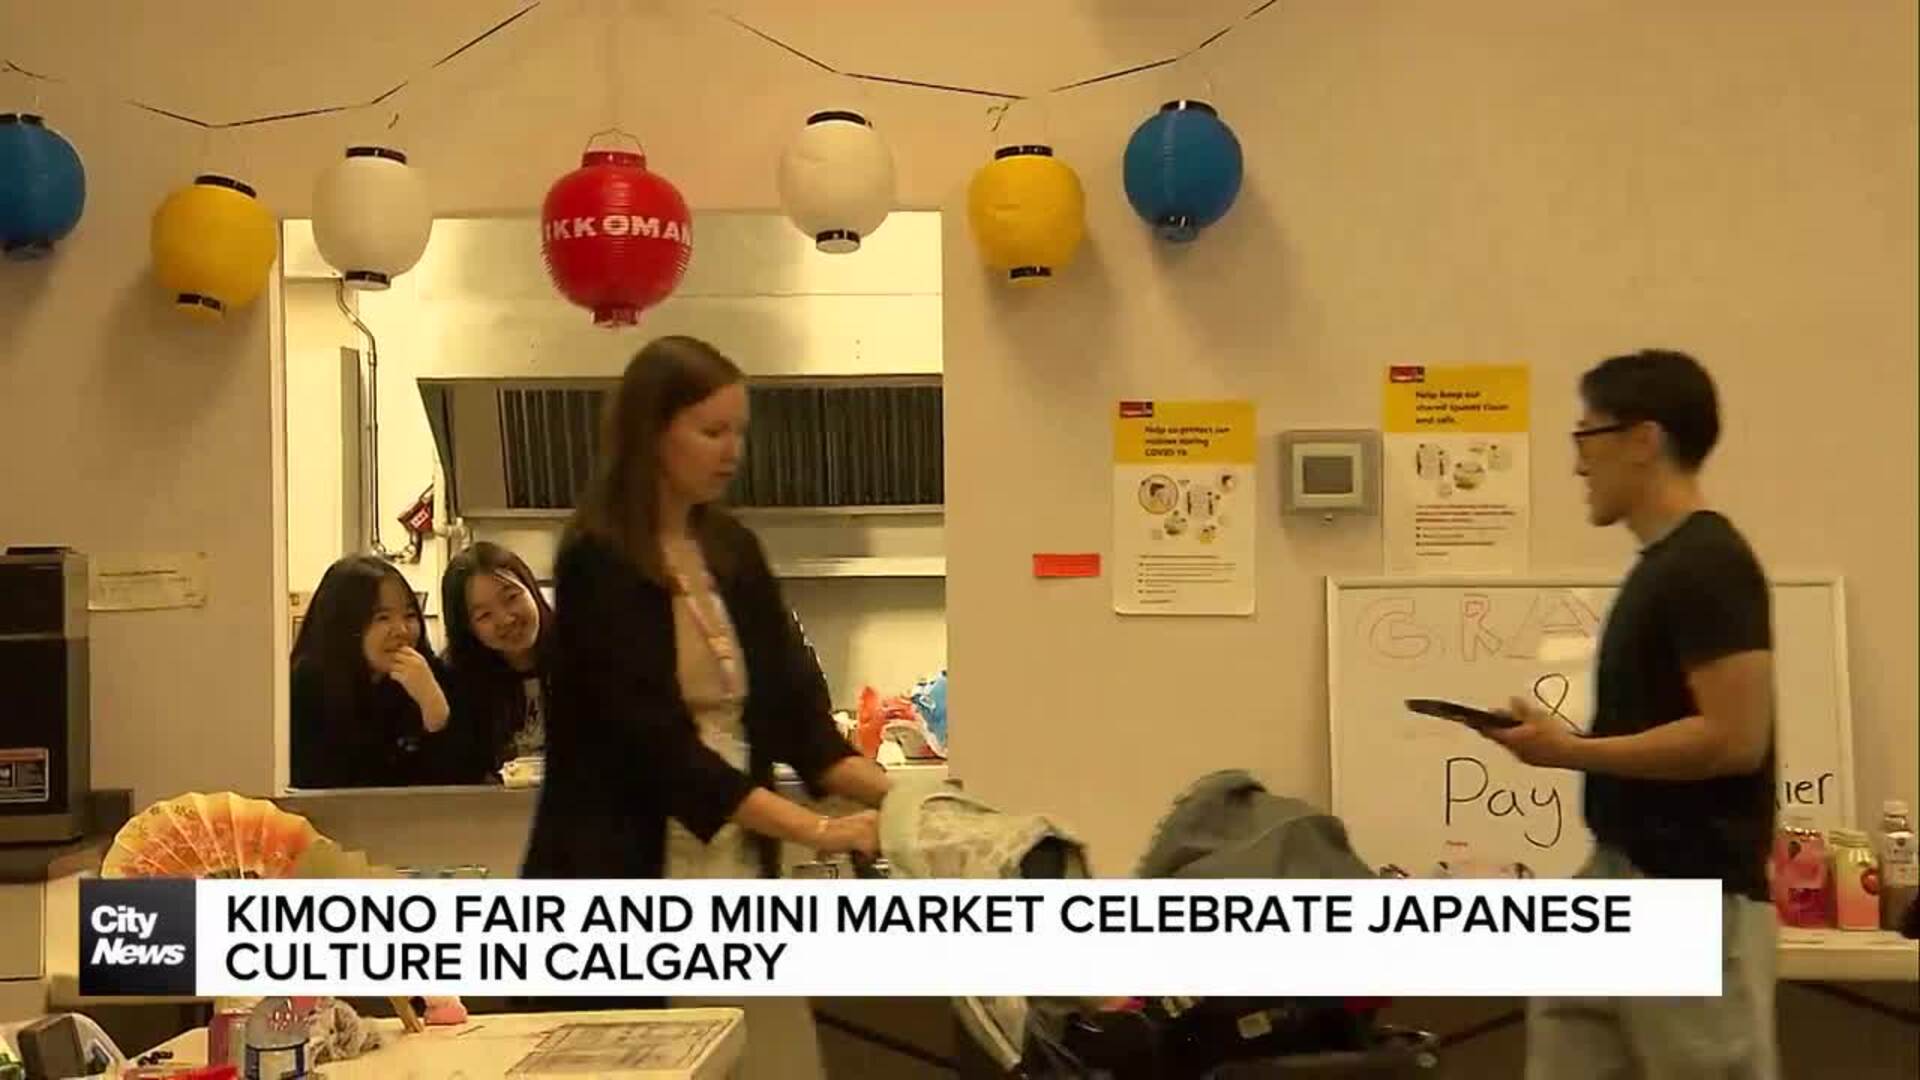 Kimono Fair and Mini Market Celebrate Japanese Culture in Calgary